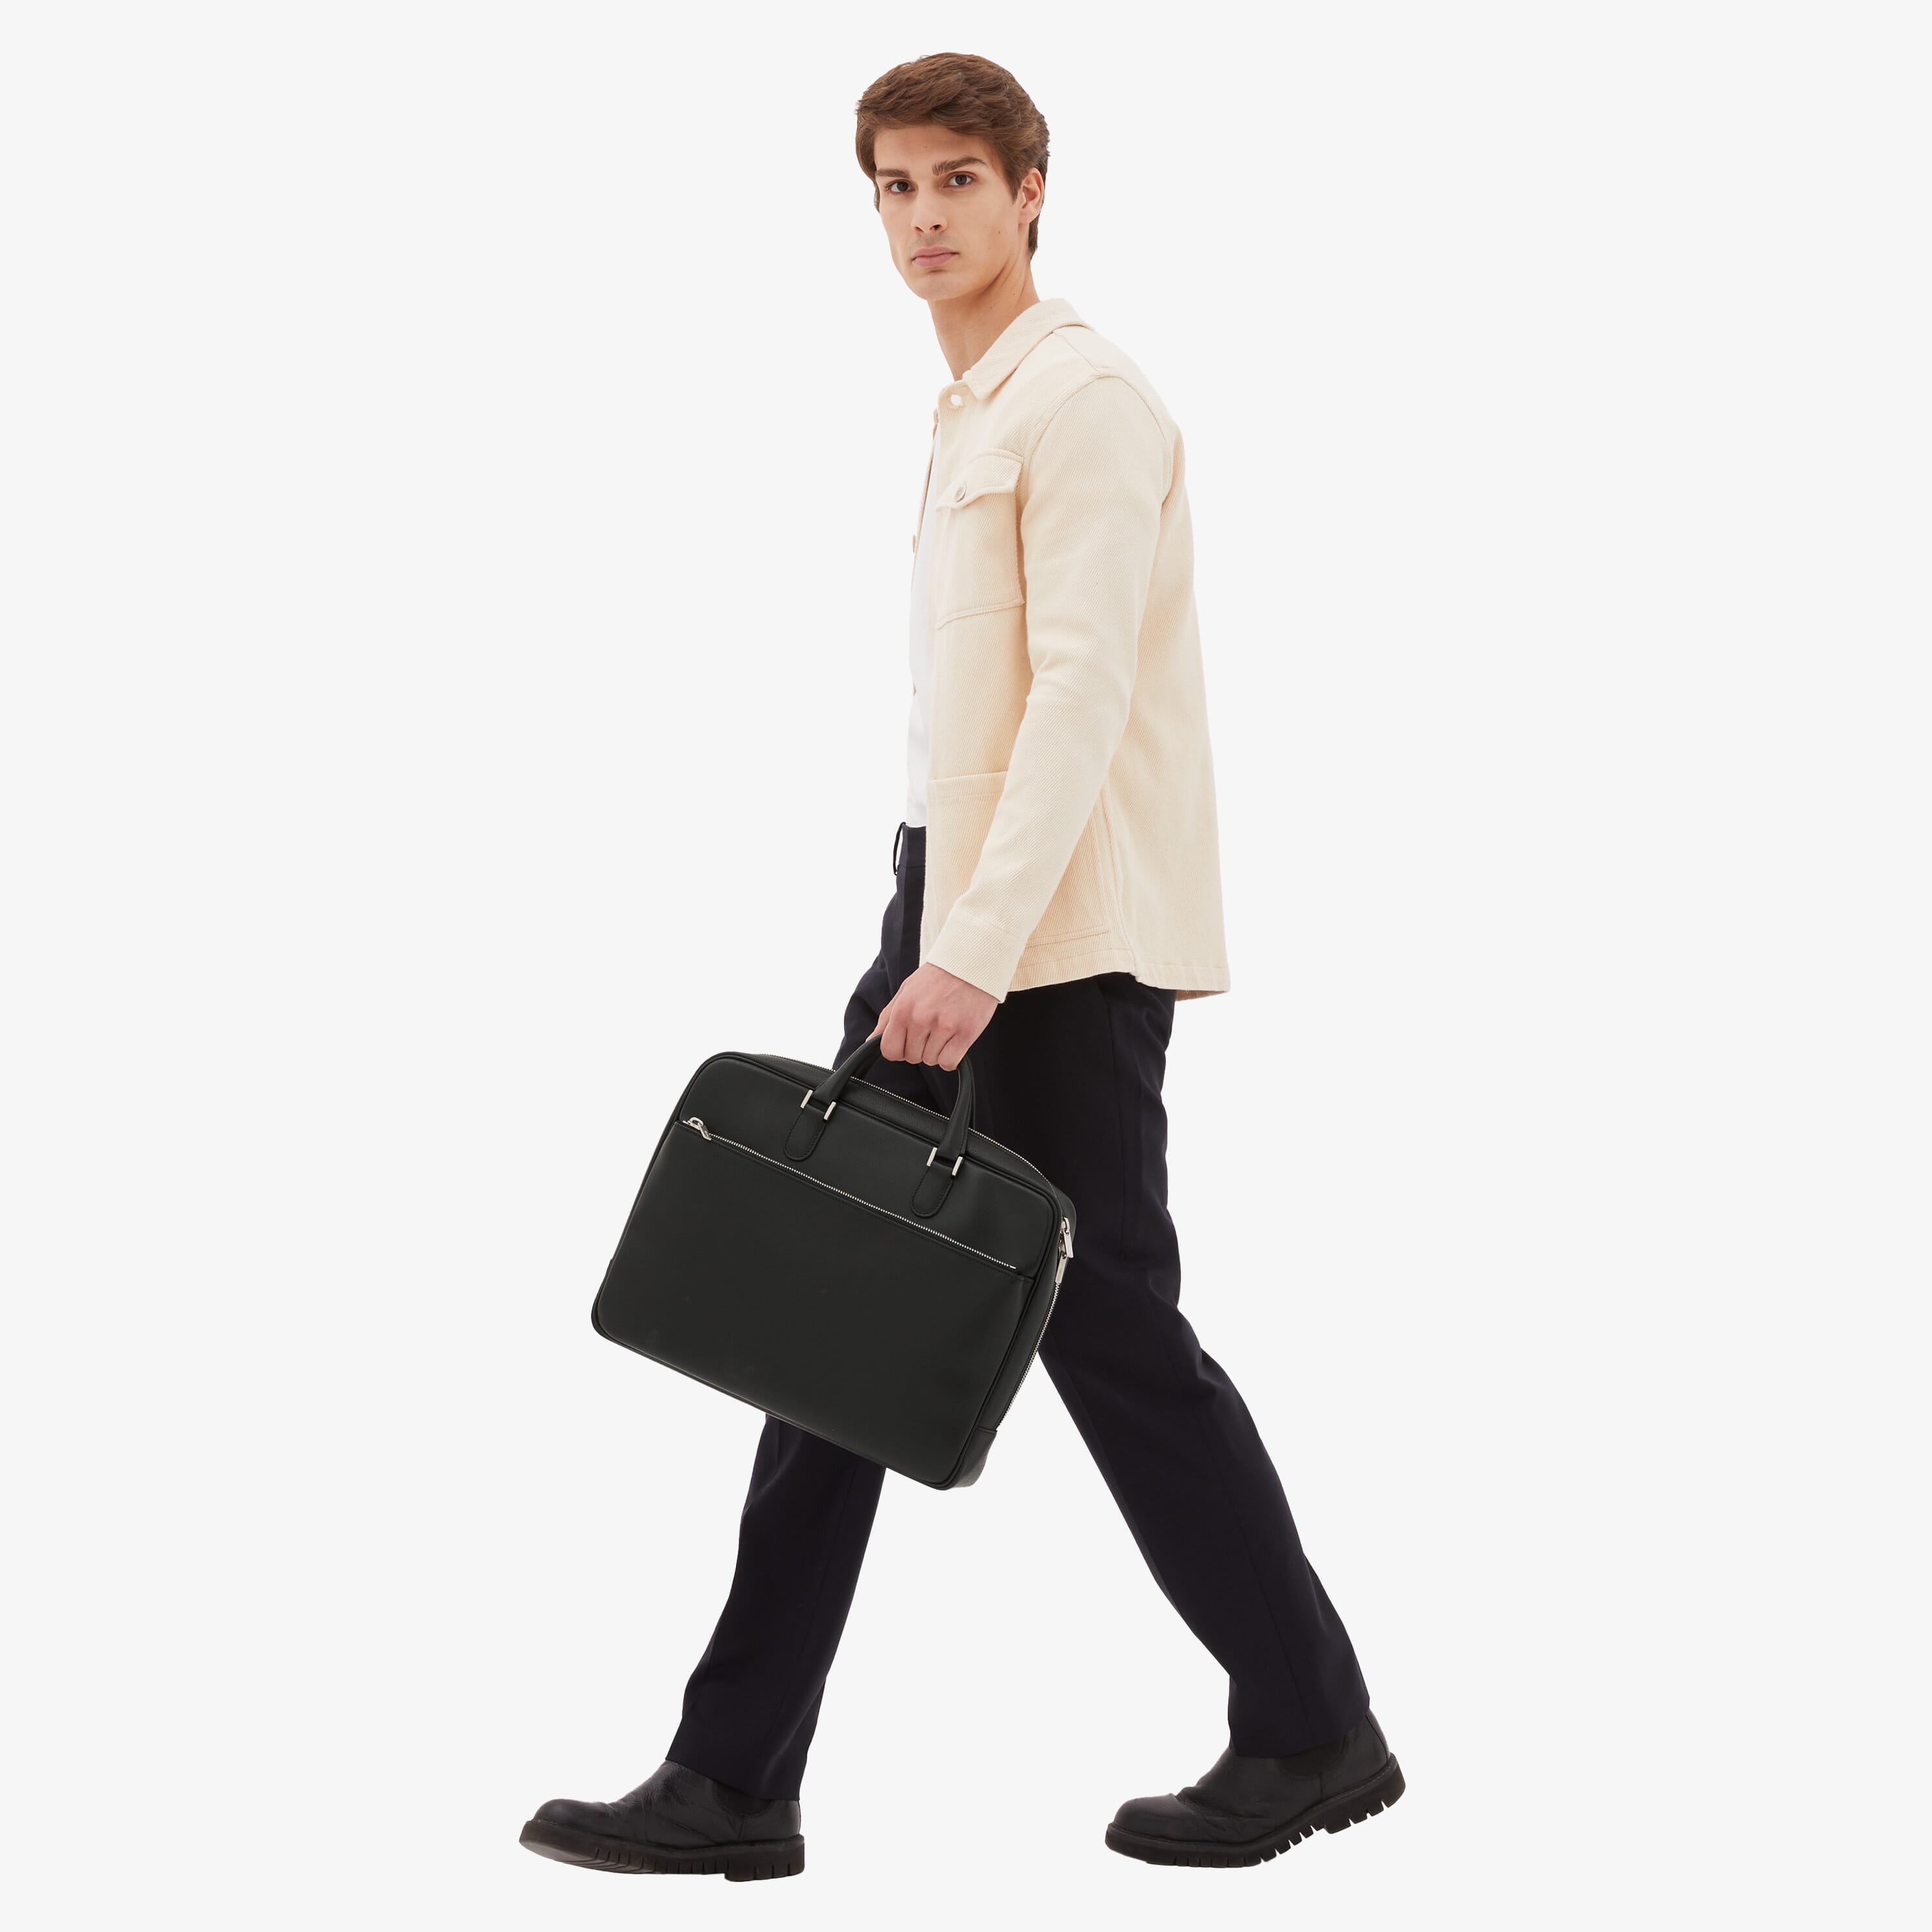 Avietta: Men's leather briefcases, messenger bags, satchels | Valextra